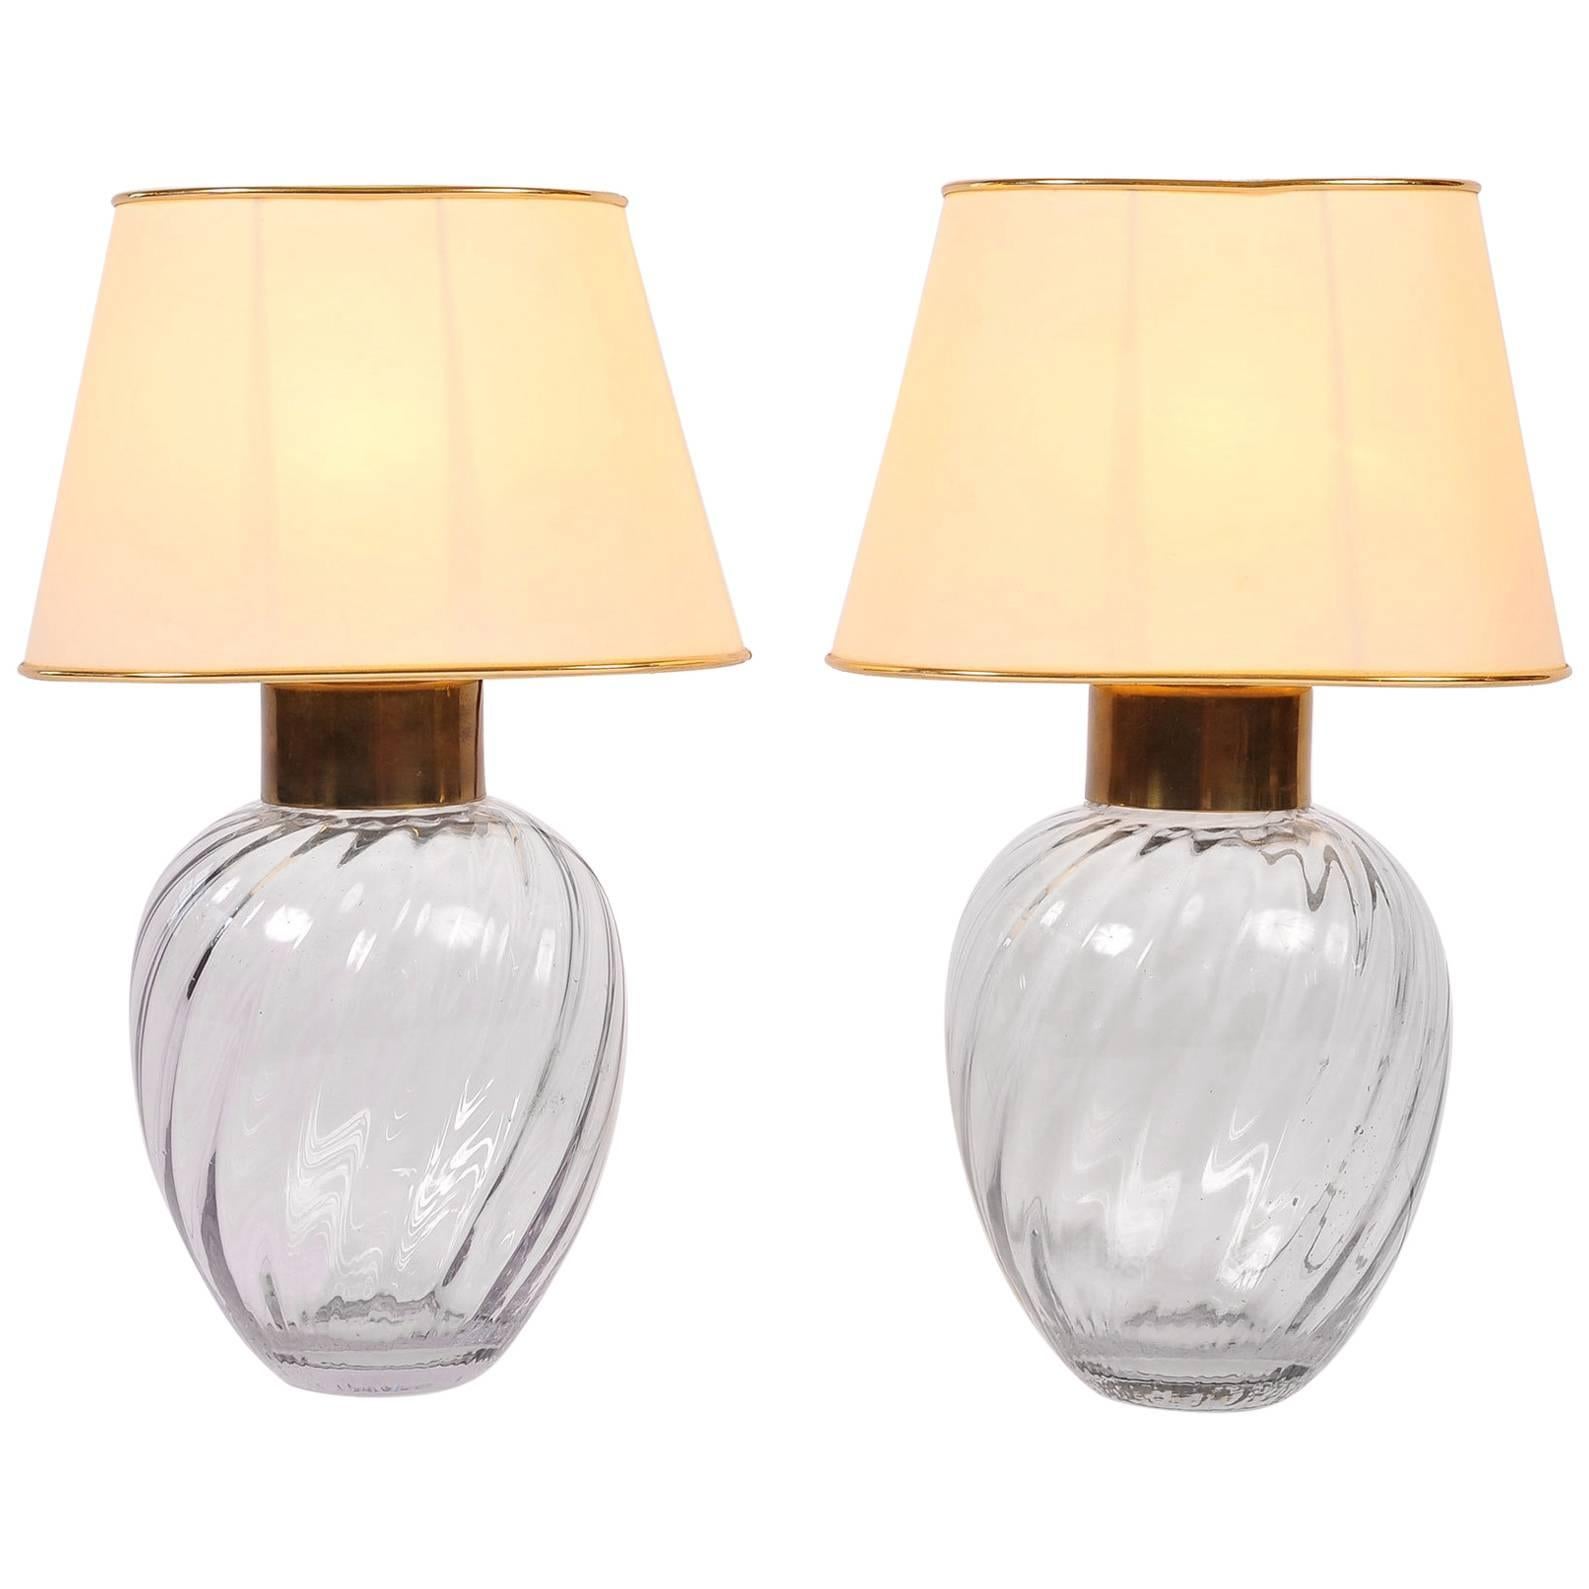 Pair of Italian 1950s Glass Lamps